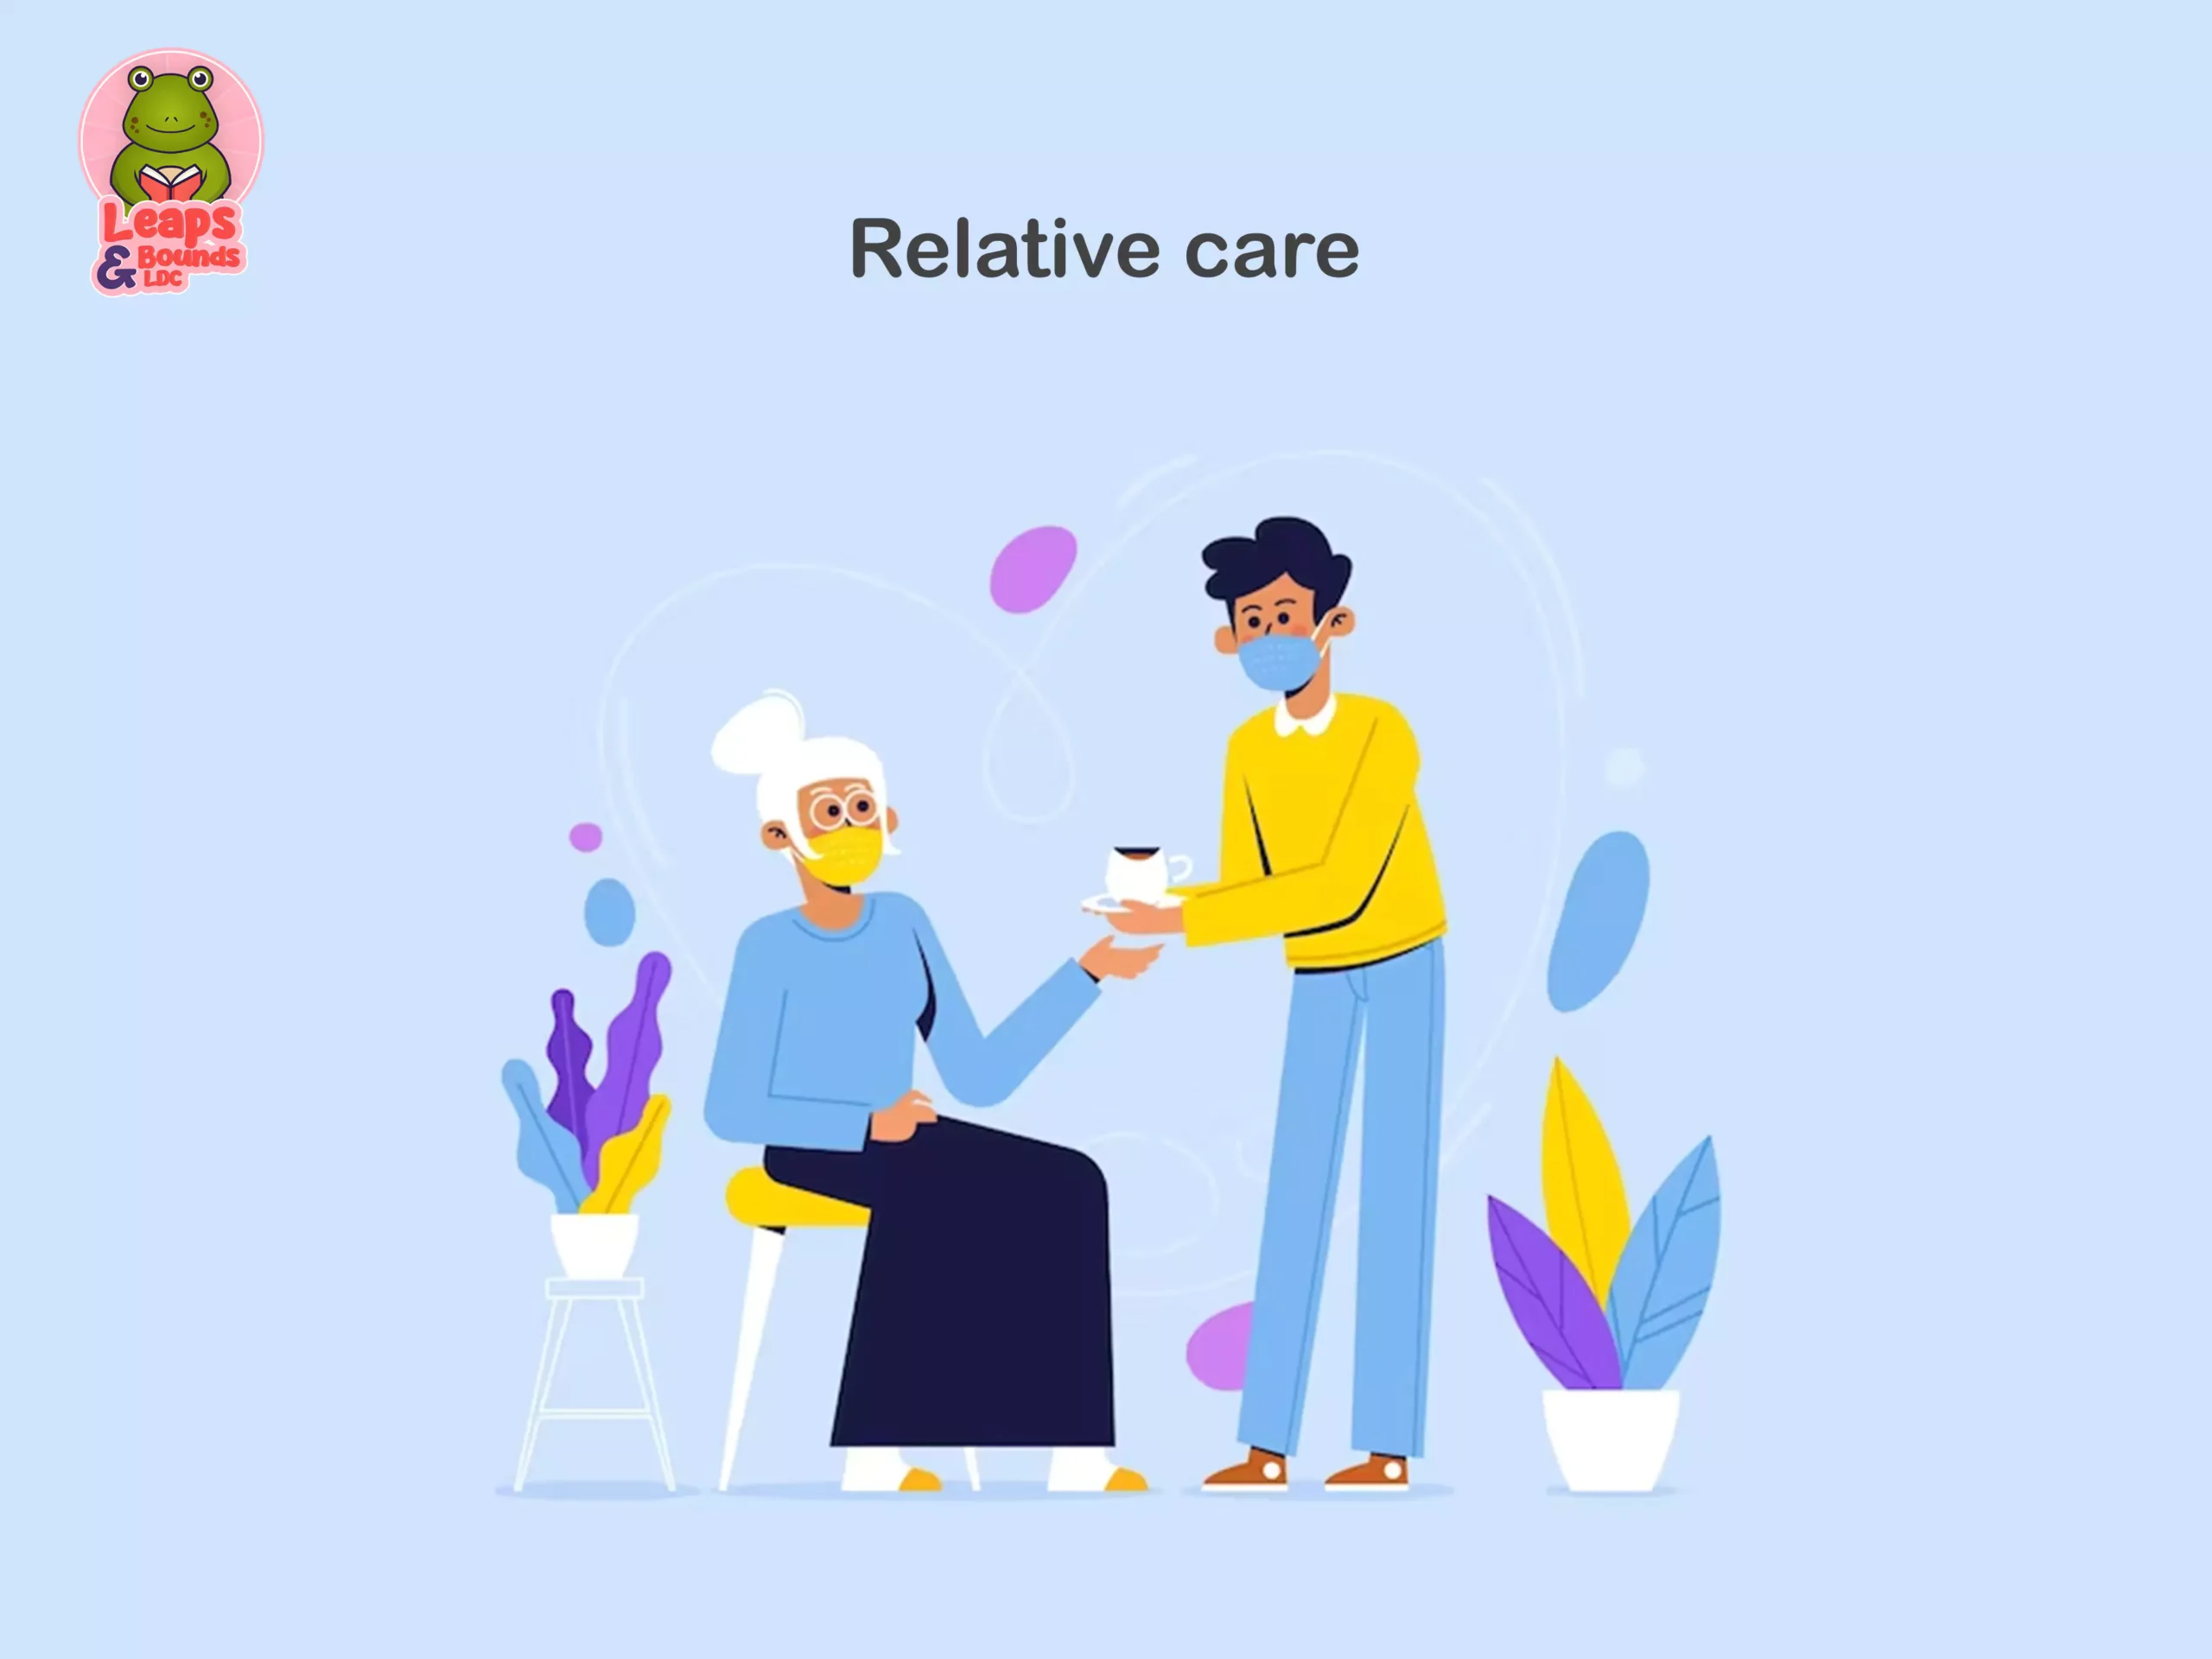 Relative care